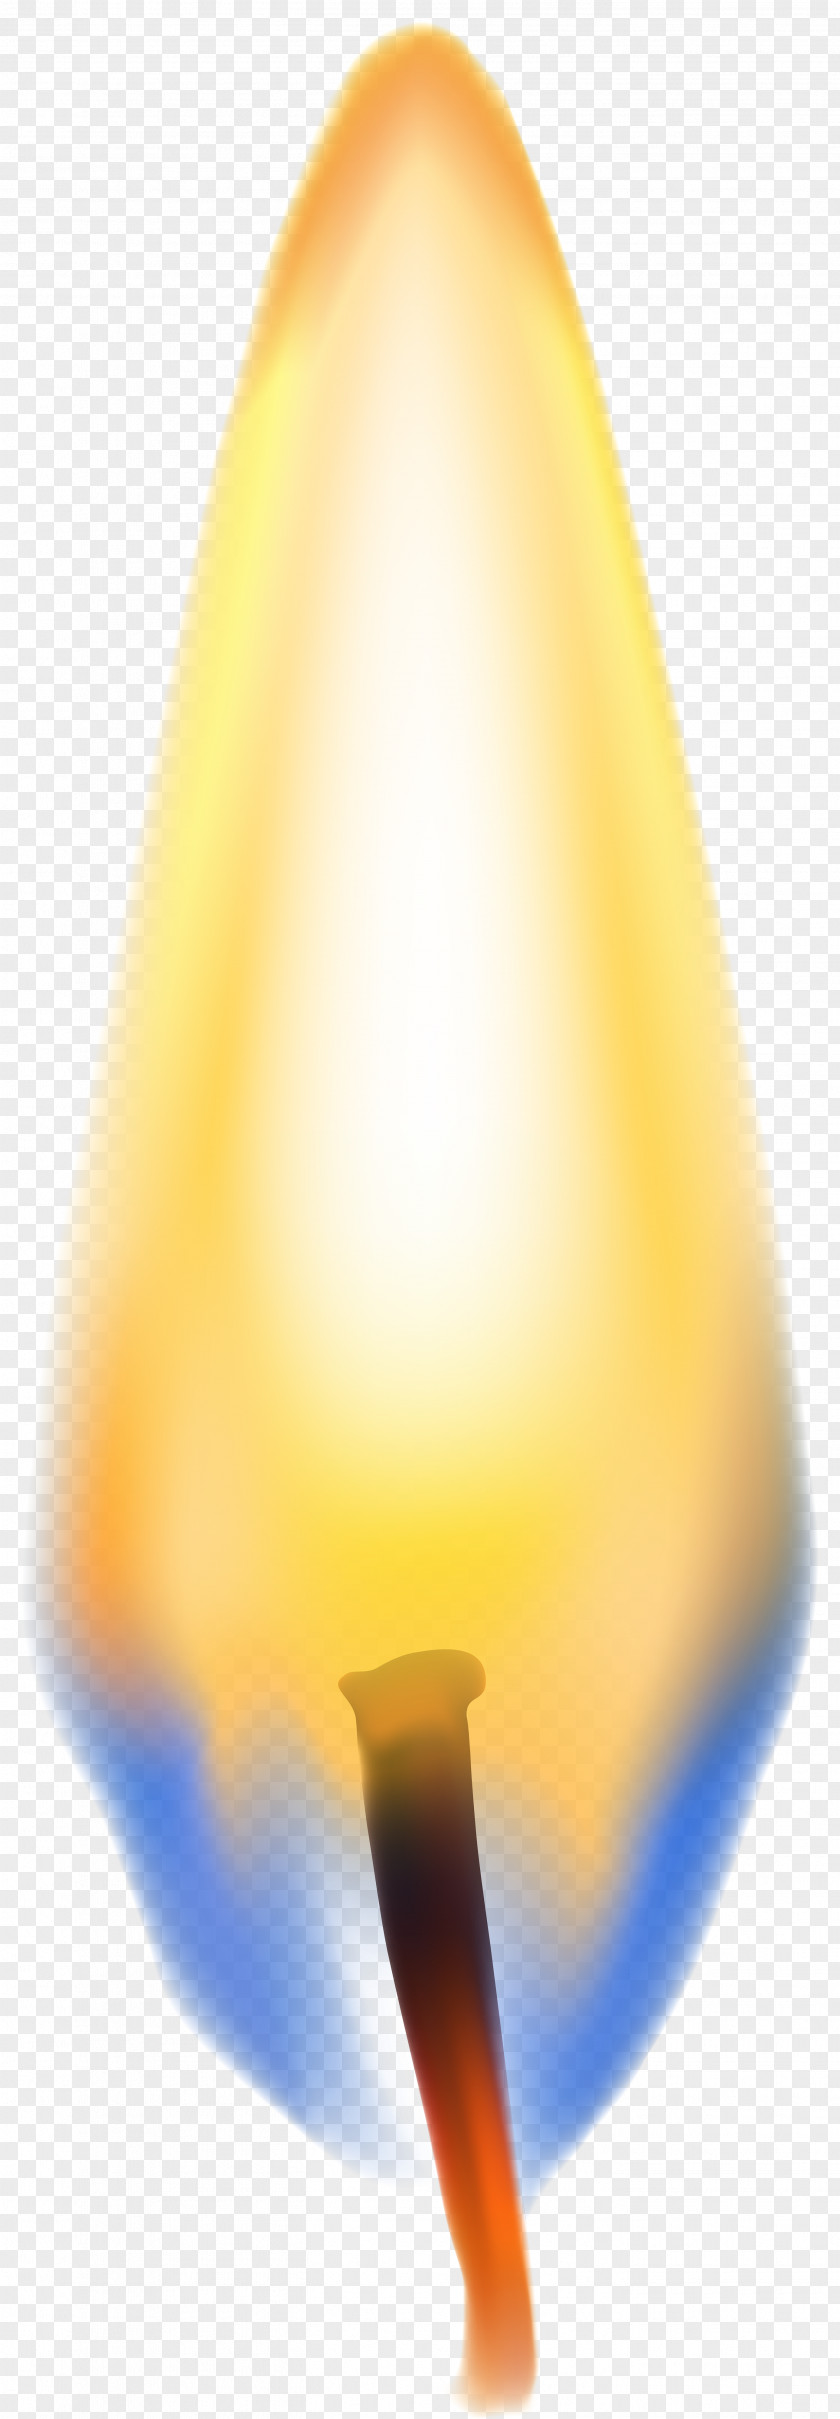 Candle Flame Transparent Clip Art Image Design Product PNG